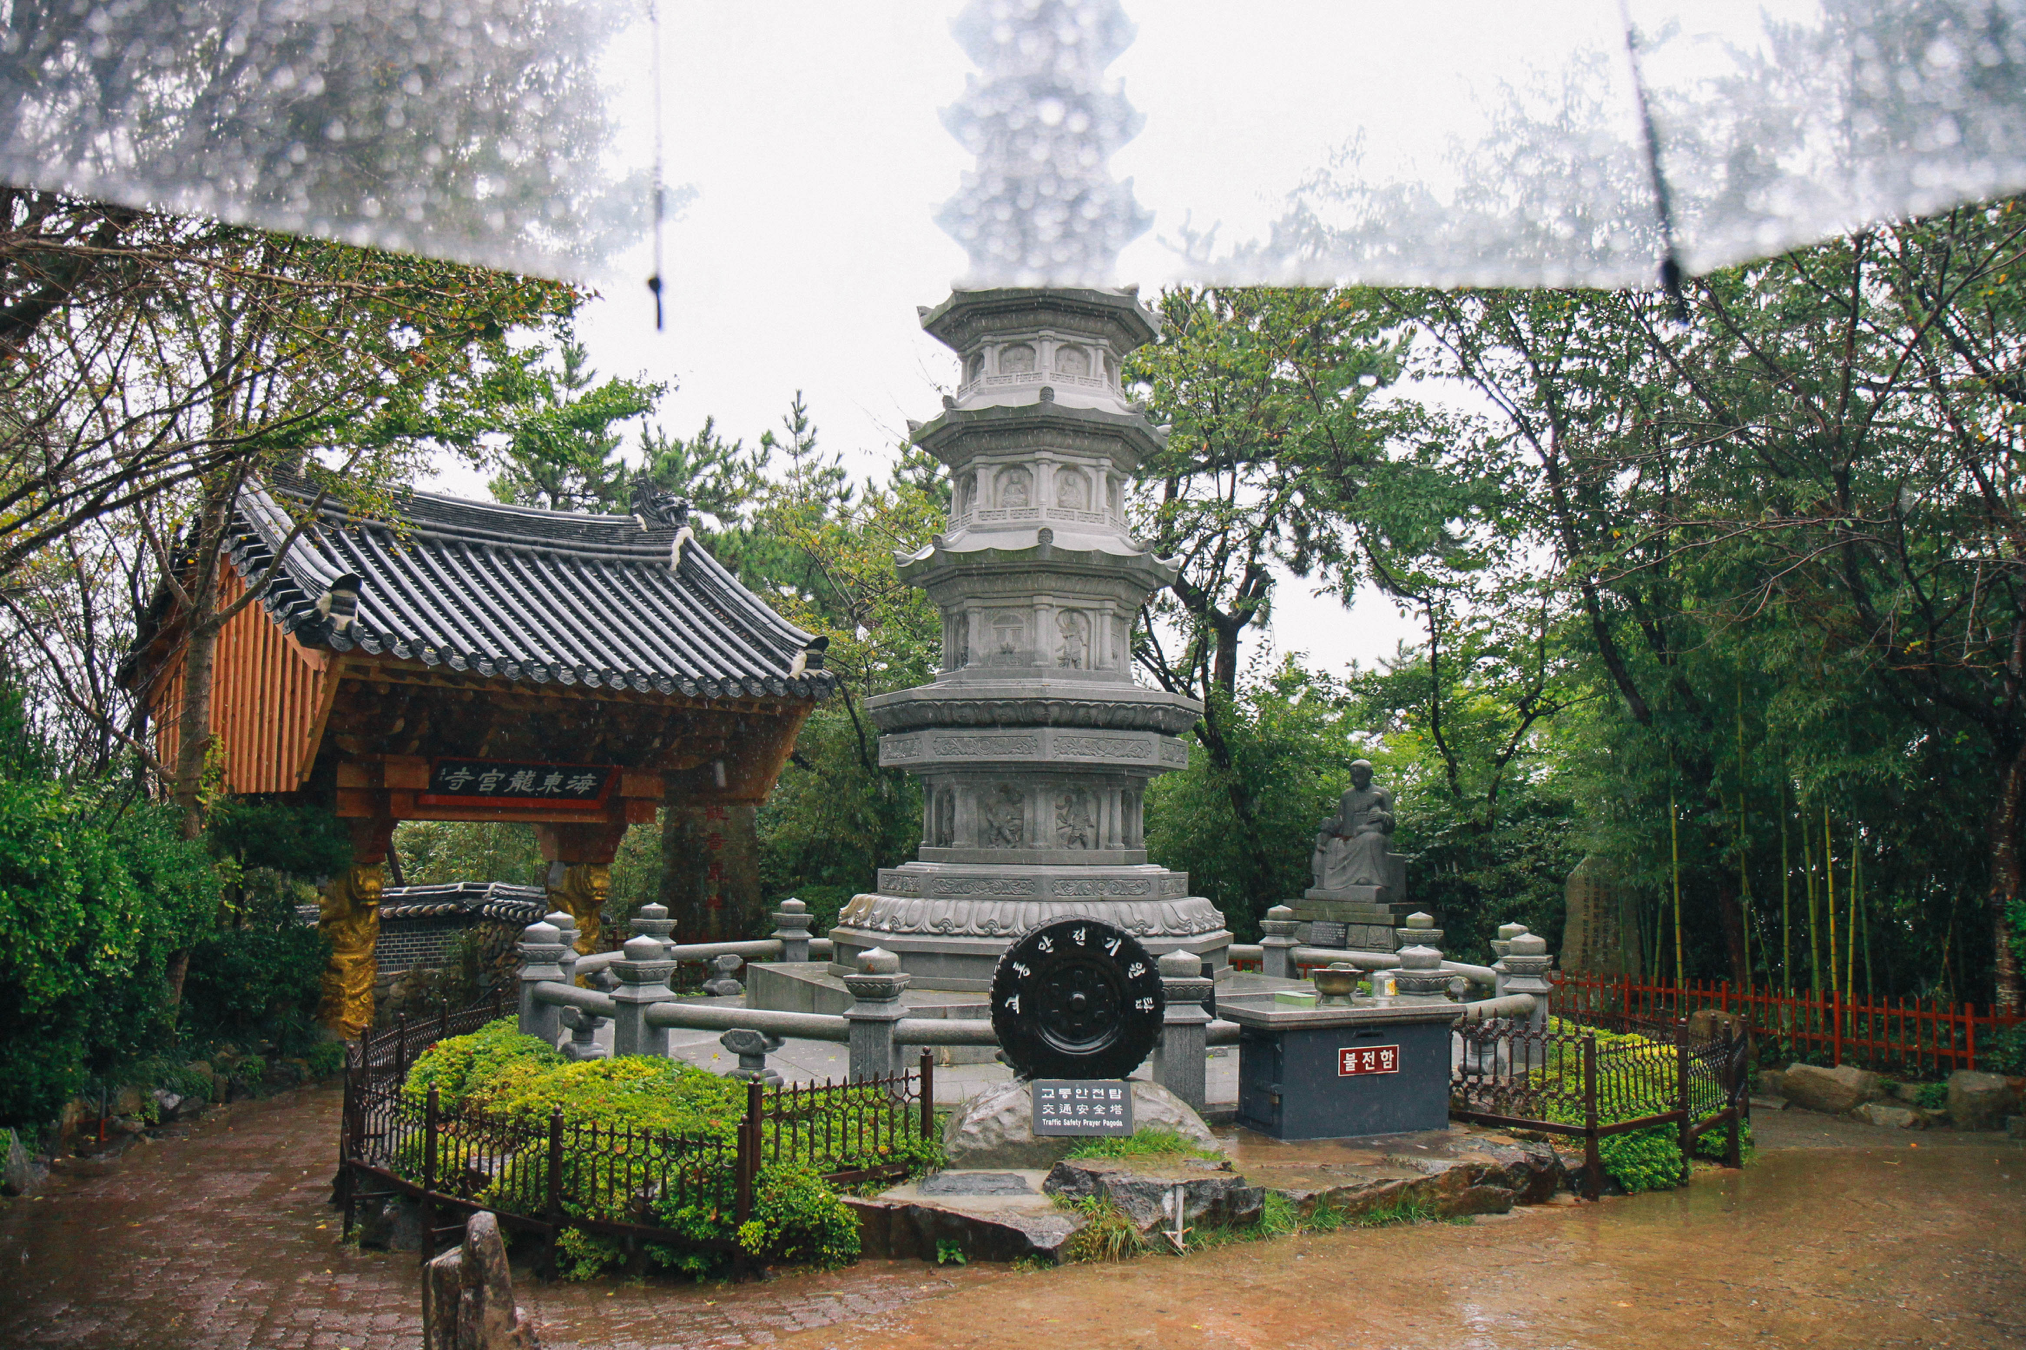 Tower structure at Haedong Yonggungsa Temple